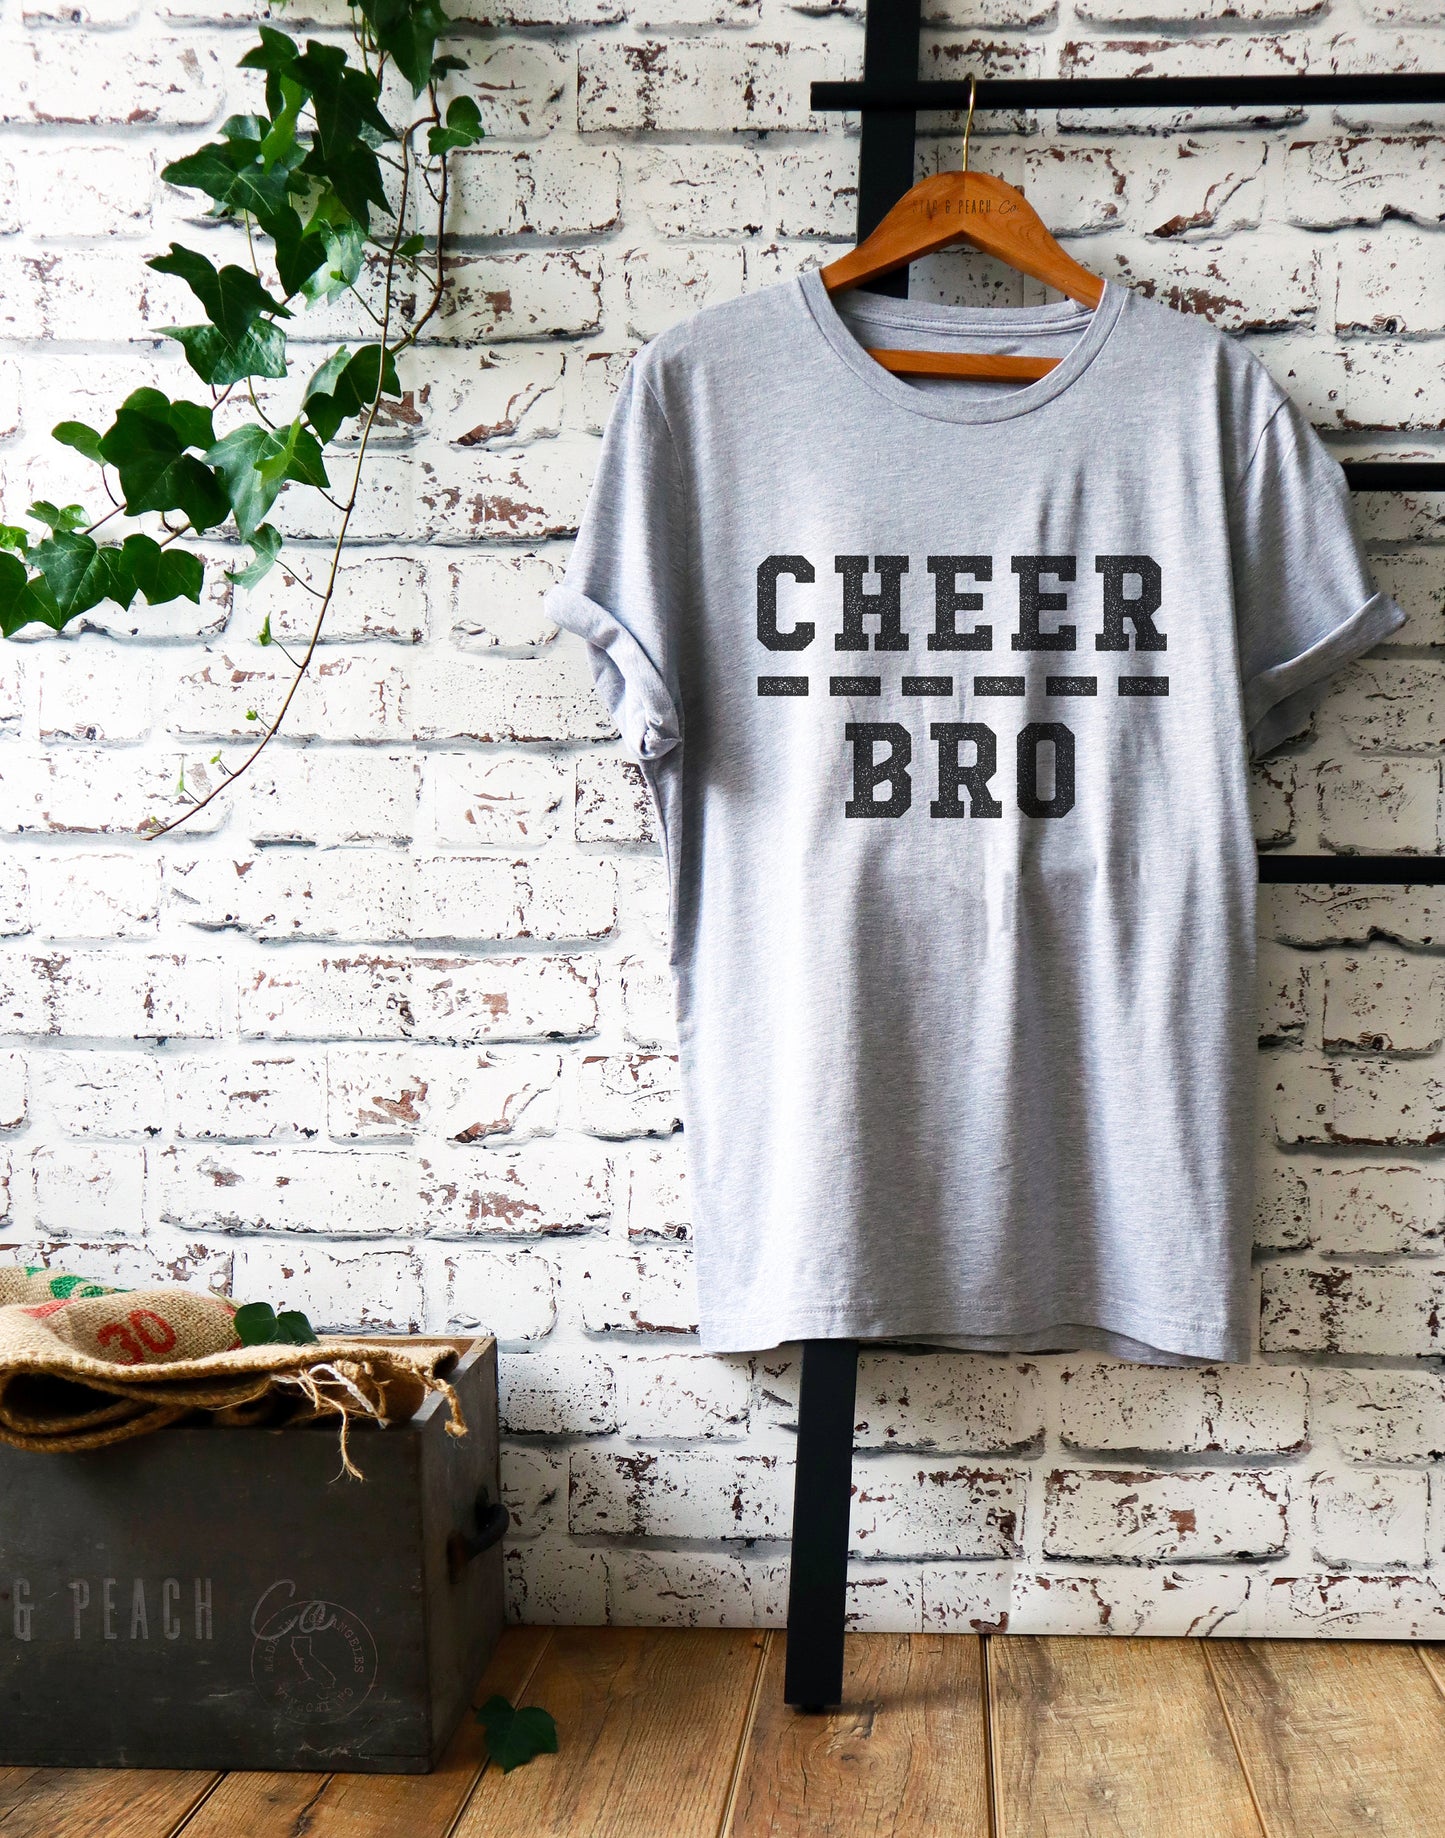 Cheer Bro Unisex Shirt - Big Brother Shirt, Cheer Shirt, Cheer Bodyguard, Competition Shirt, Cheerleading Shirt, Cheer Brother Shirt